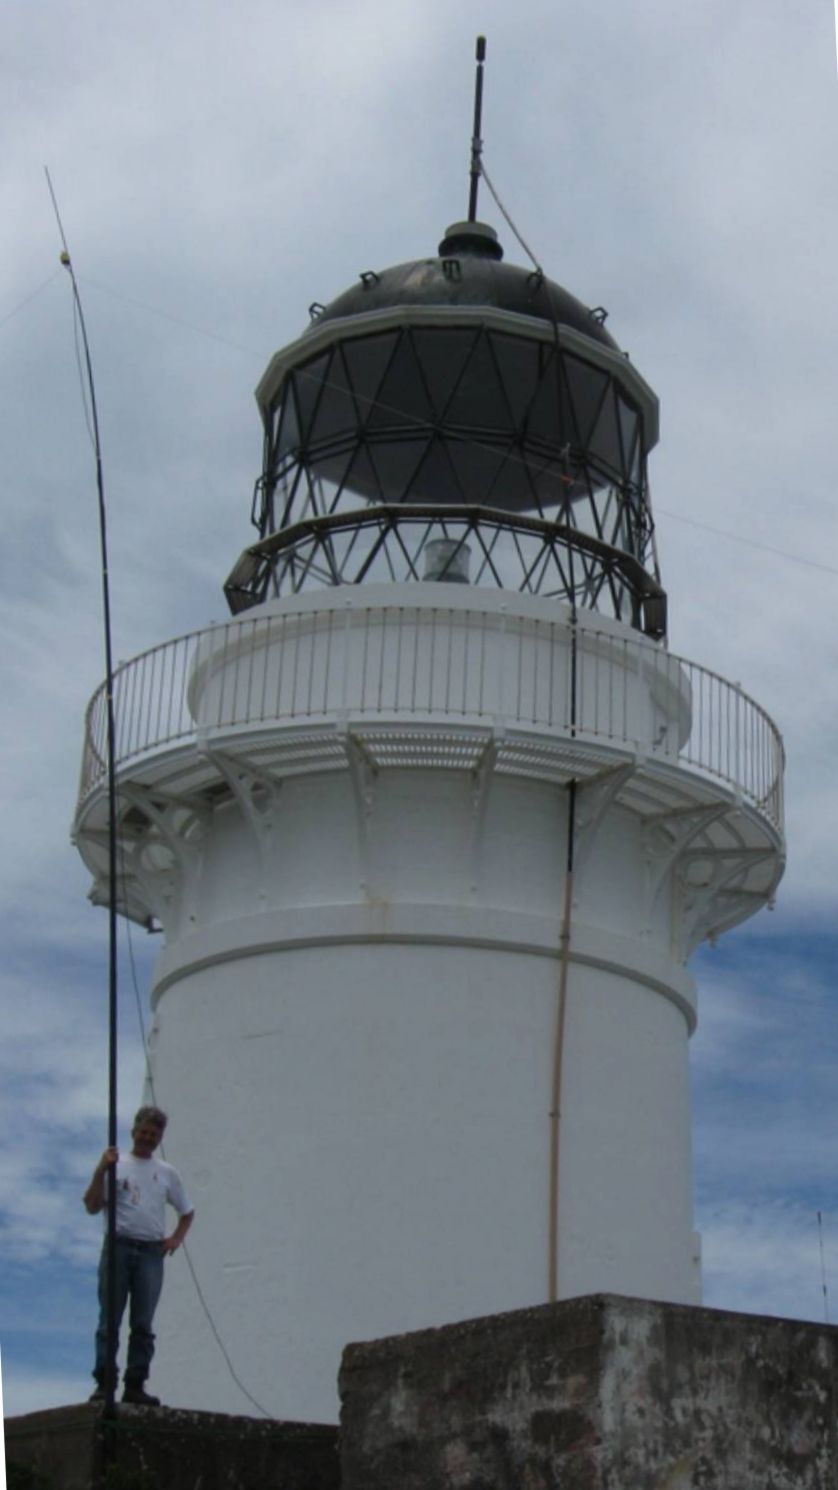 Mokohinau Lighthouse